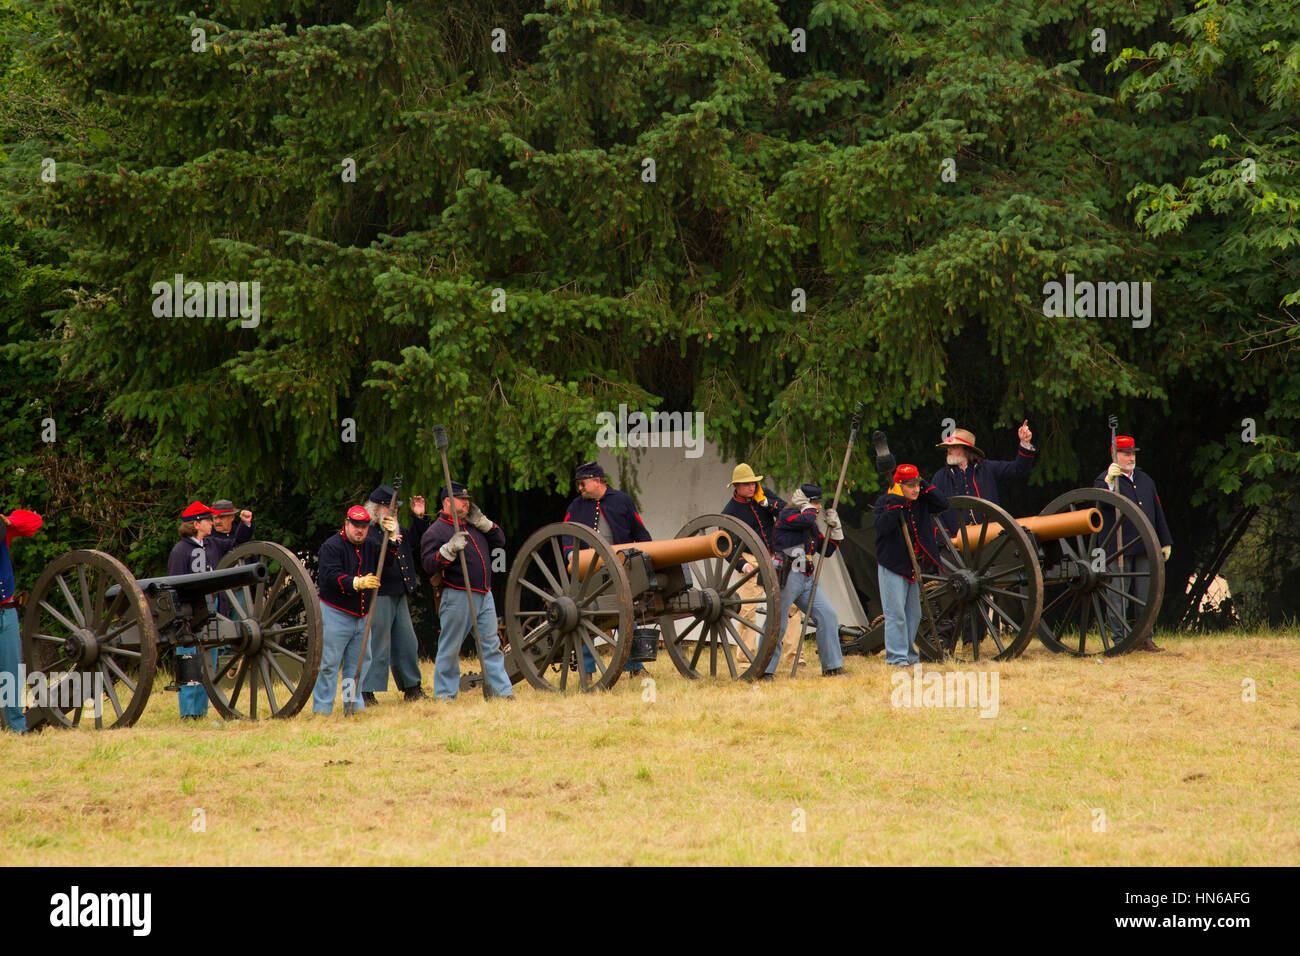 Confederate cannon battery during battle re-enactment, Civil War Reenactment, Willamette Mission State Park, Oregon Stock Photo